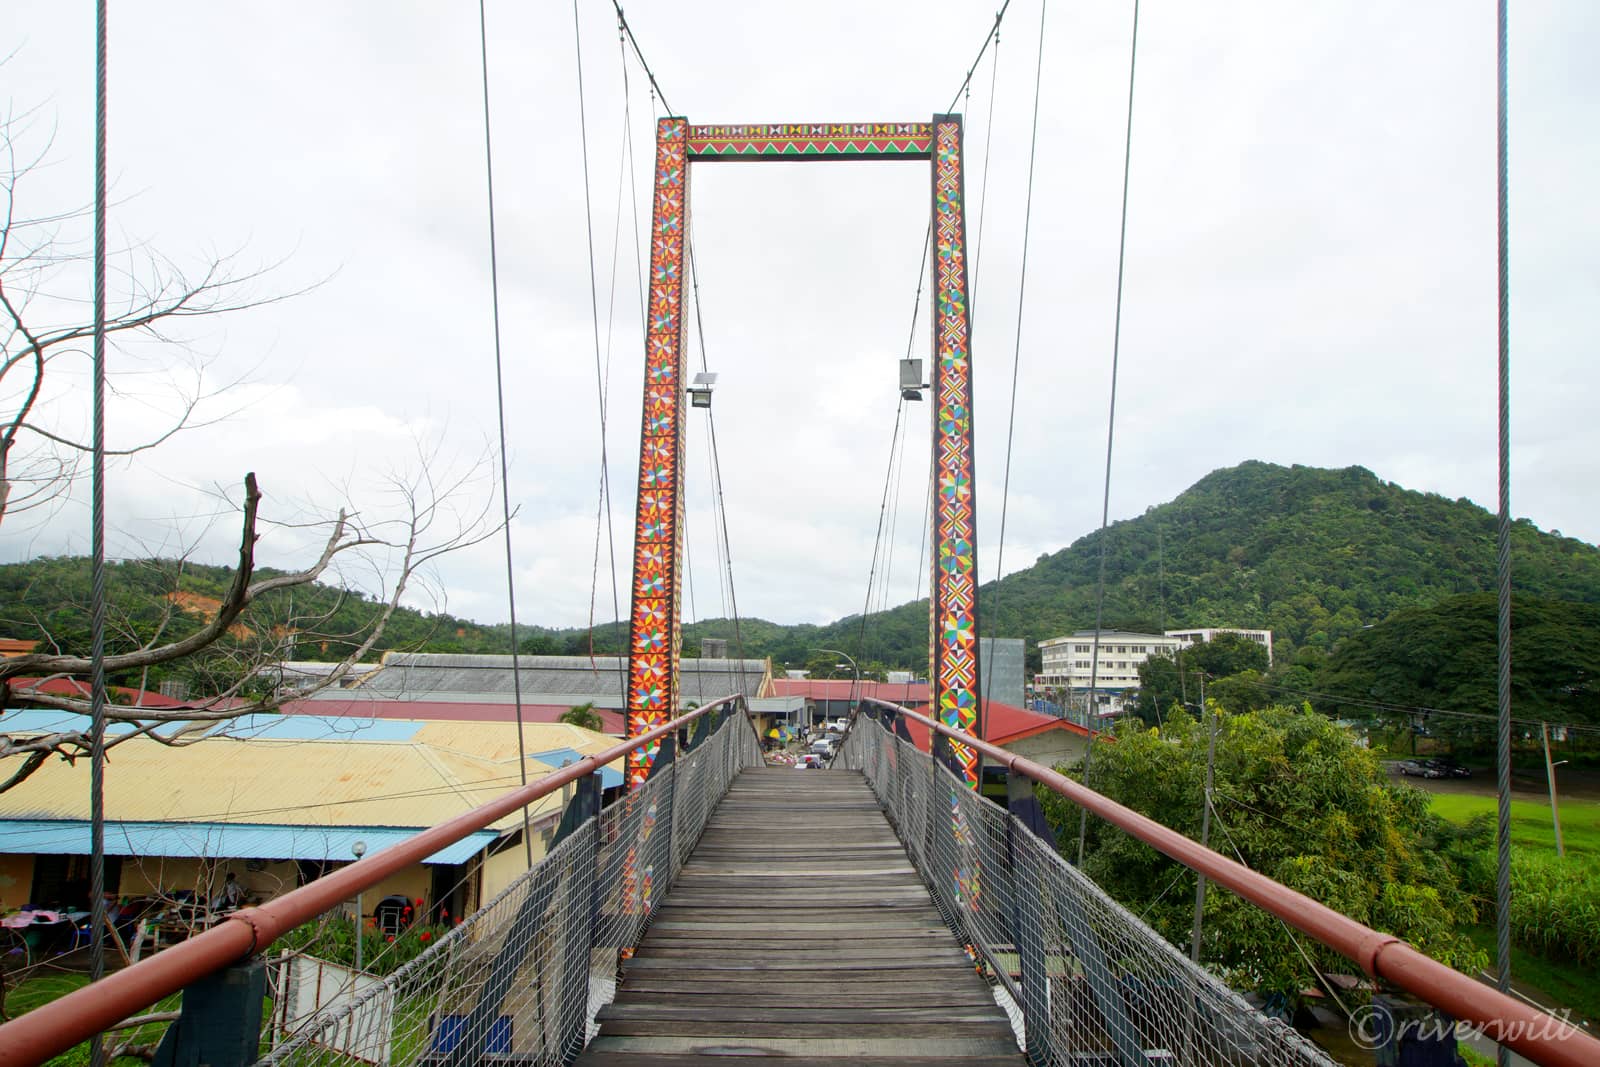 Tamparuli Bridge in Kota Kinabalu